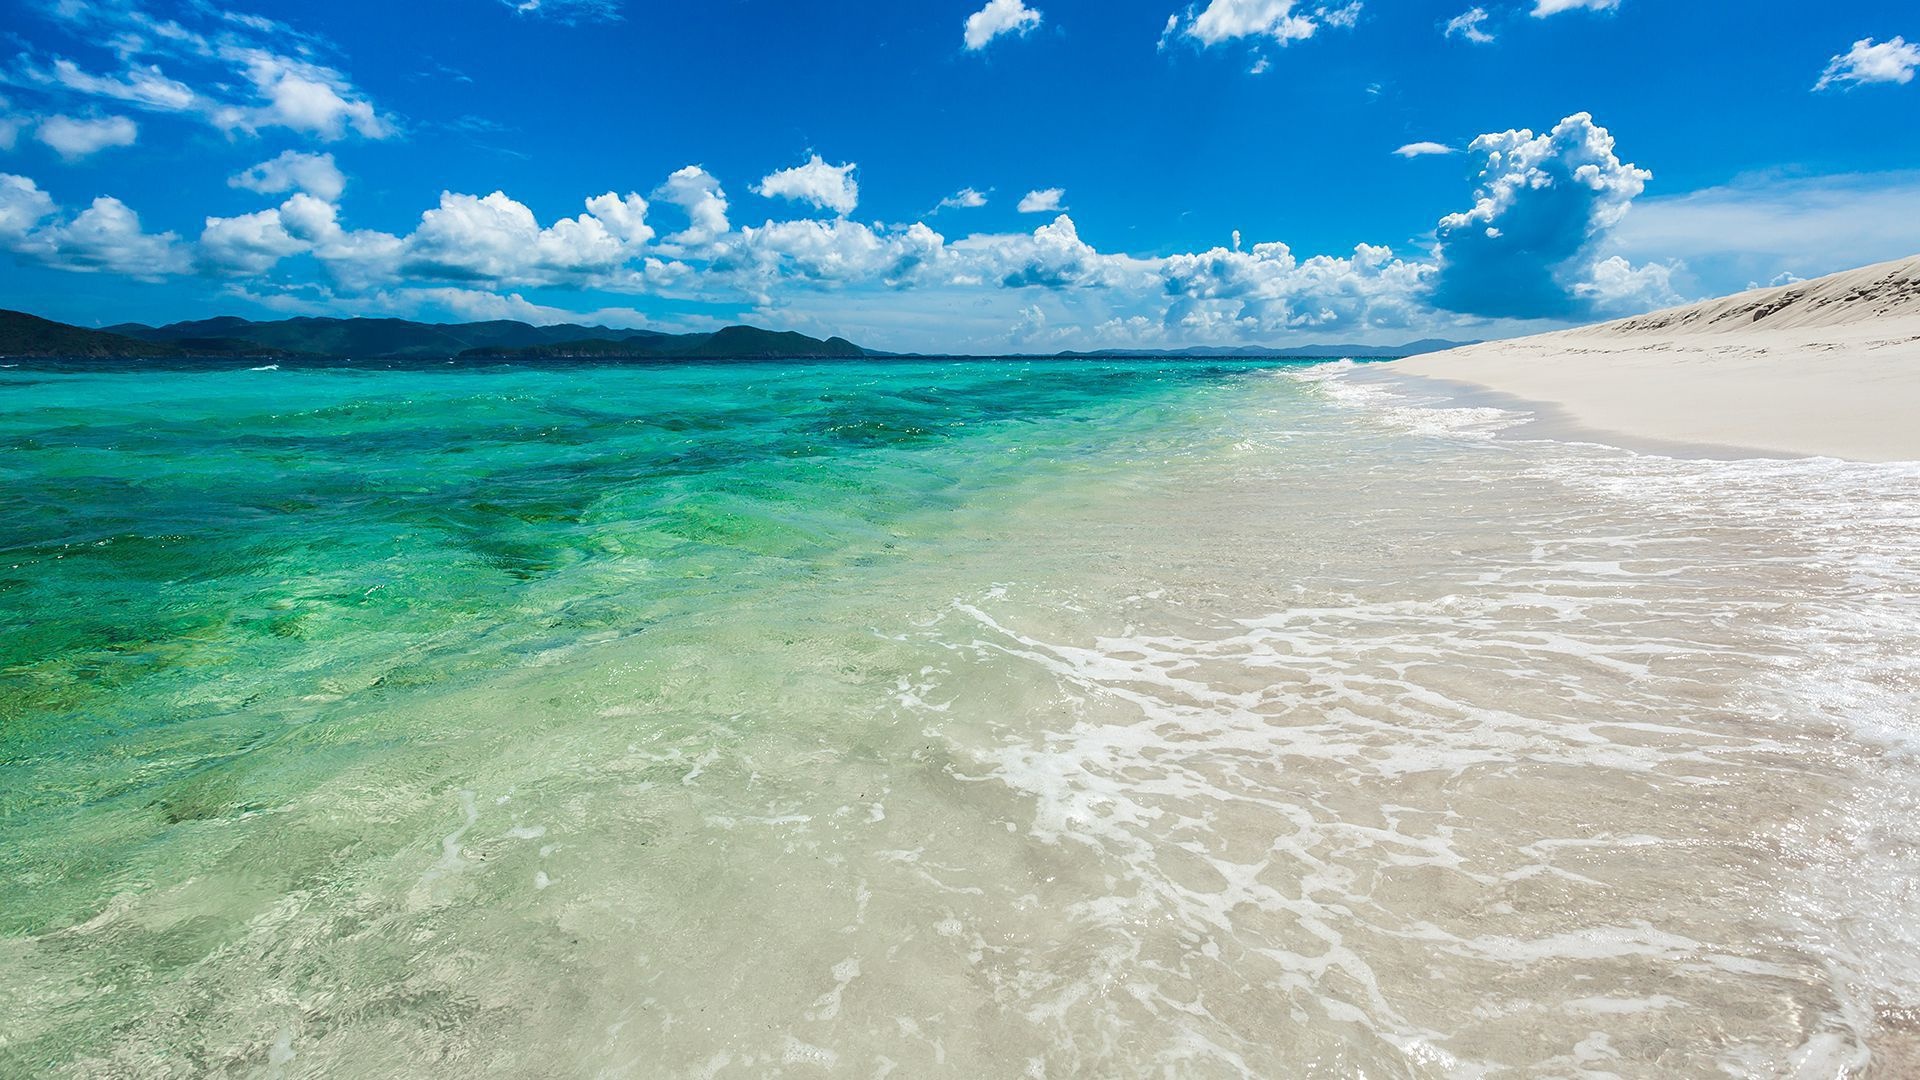 Picture-perfect British Virgin Islands, Breathtaking views, Tropical paradise, Island serenity, 1920x1080 Full HD Desktop